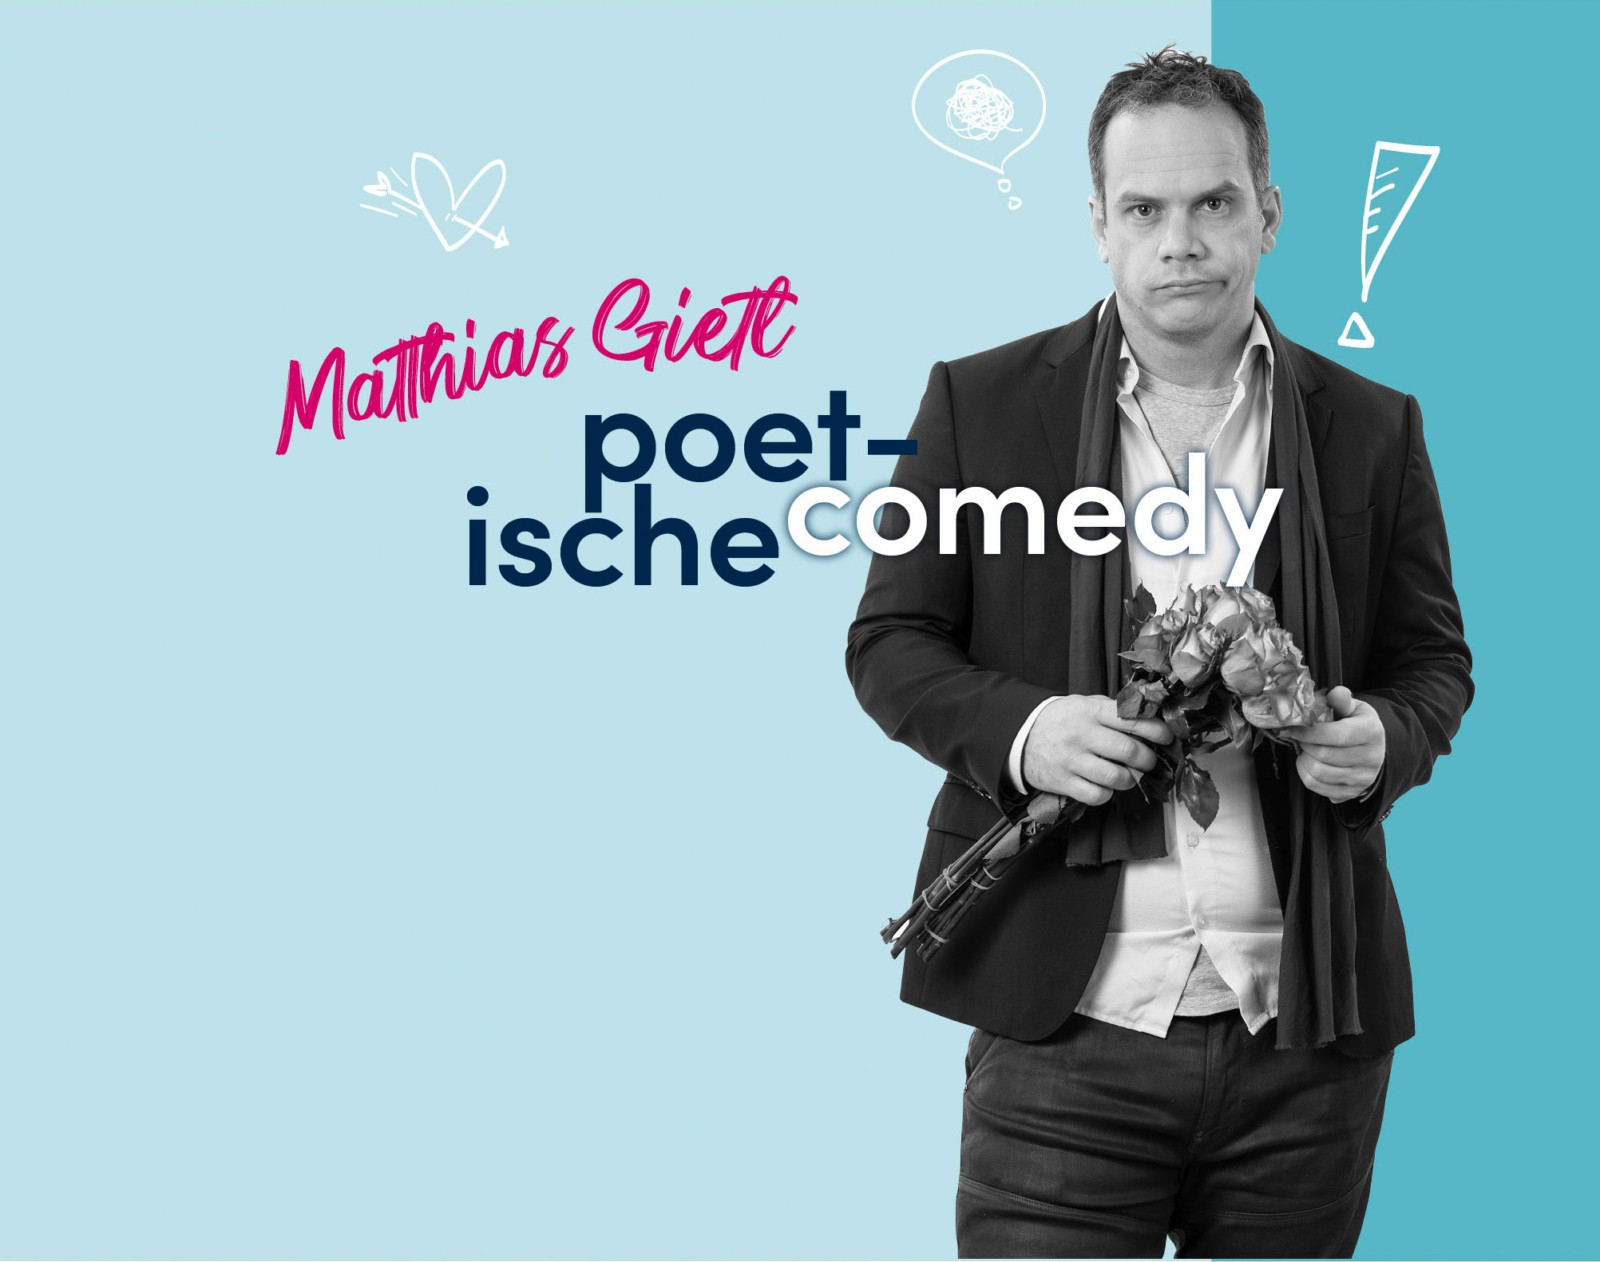 Matthias Gietl - poetische comedy